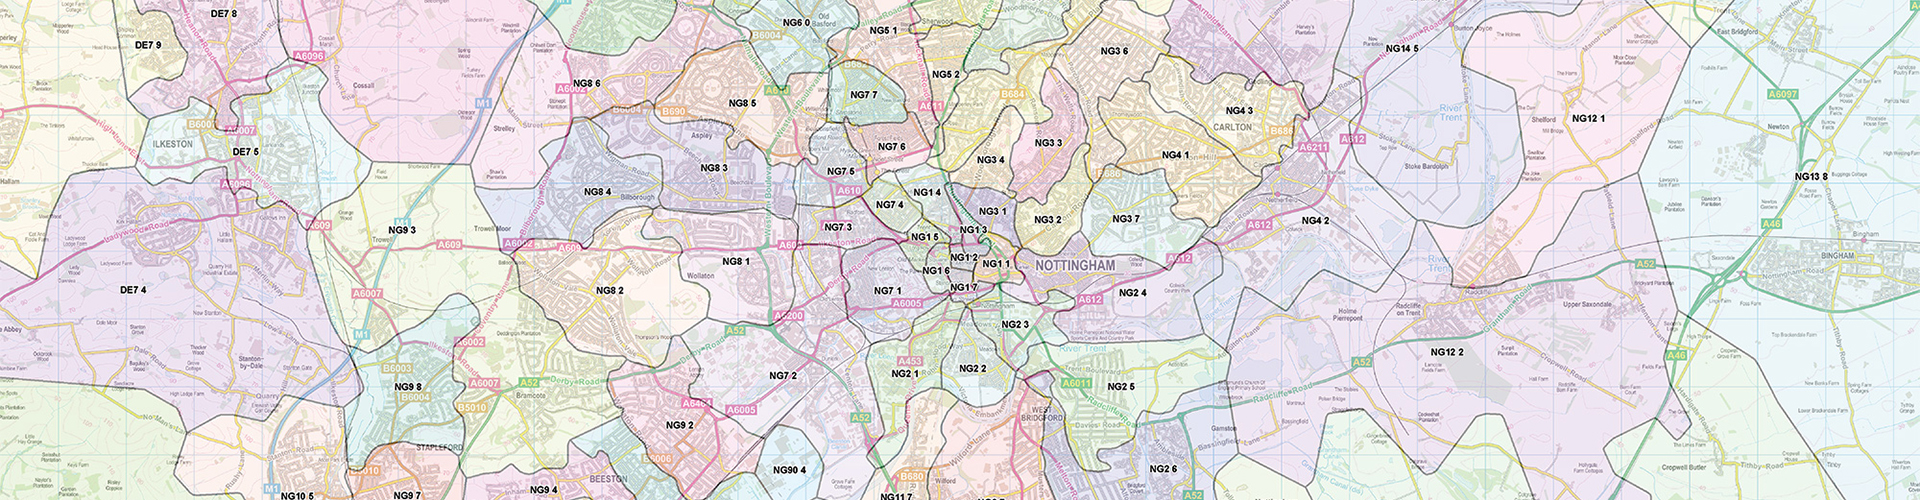 Postcode maps header image